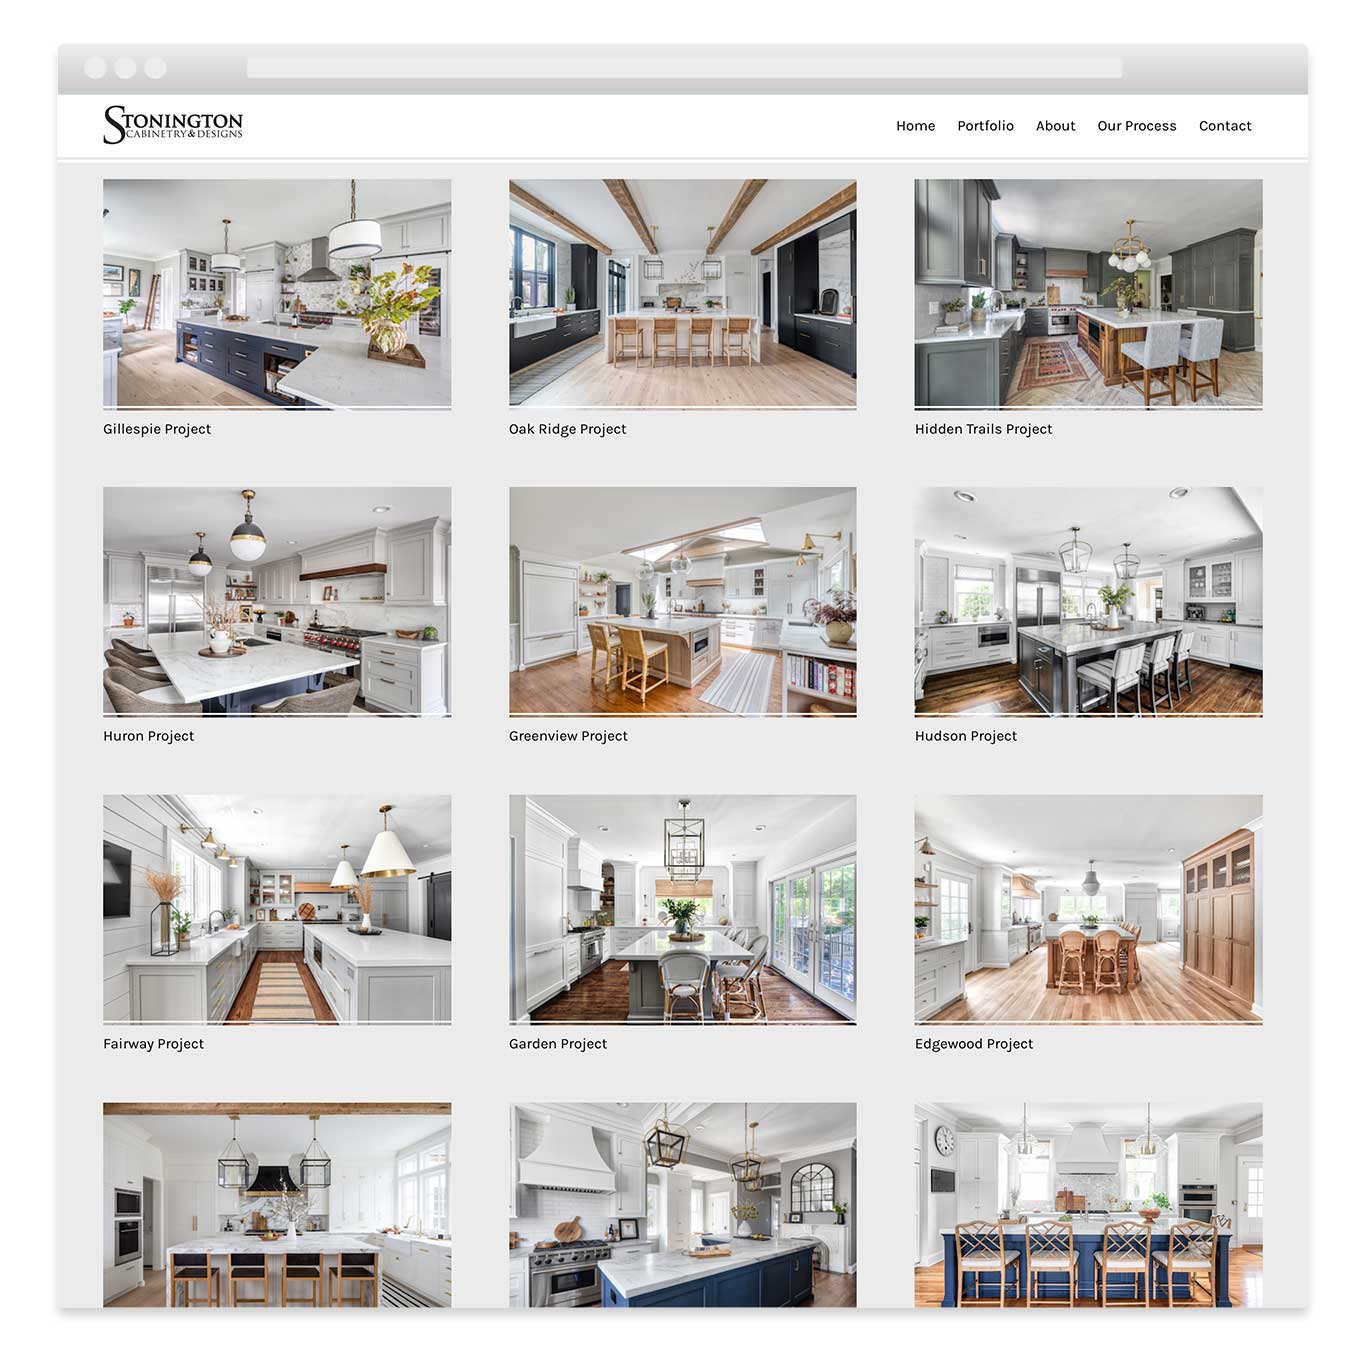 Portfolio webpage of WordPress interior design website design for Stonington Cabinetry in New Jersey.